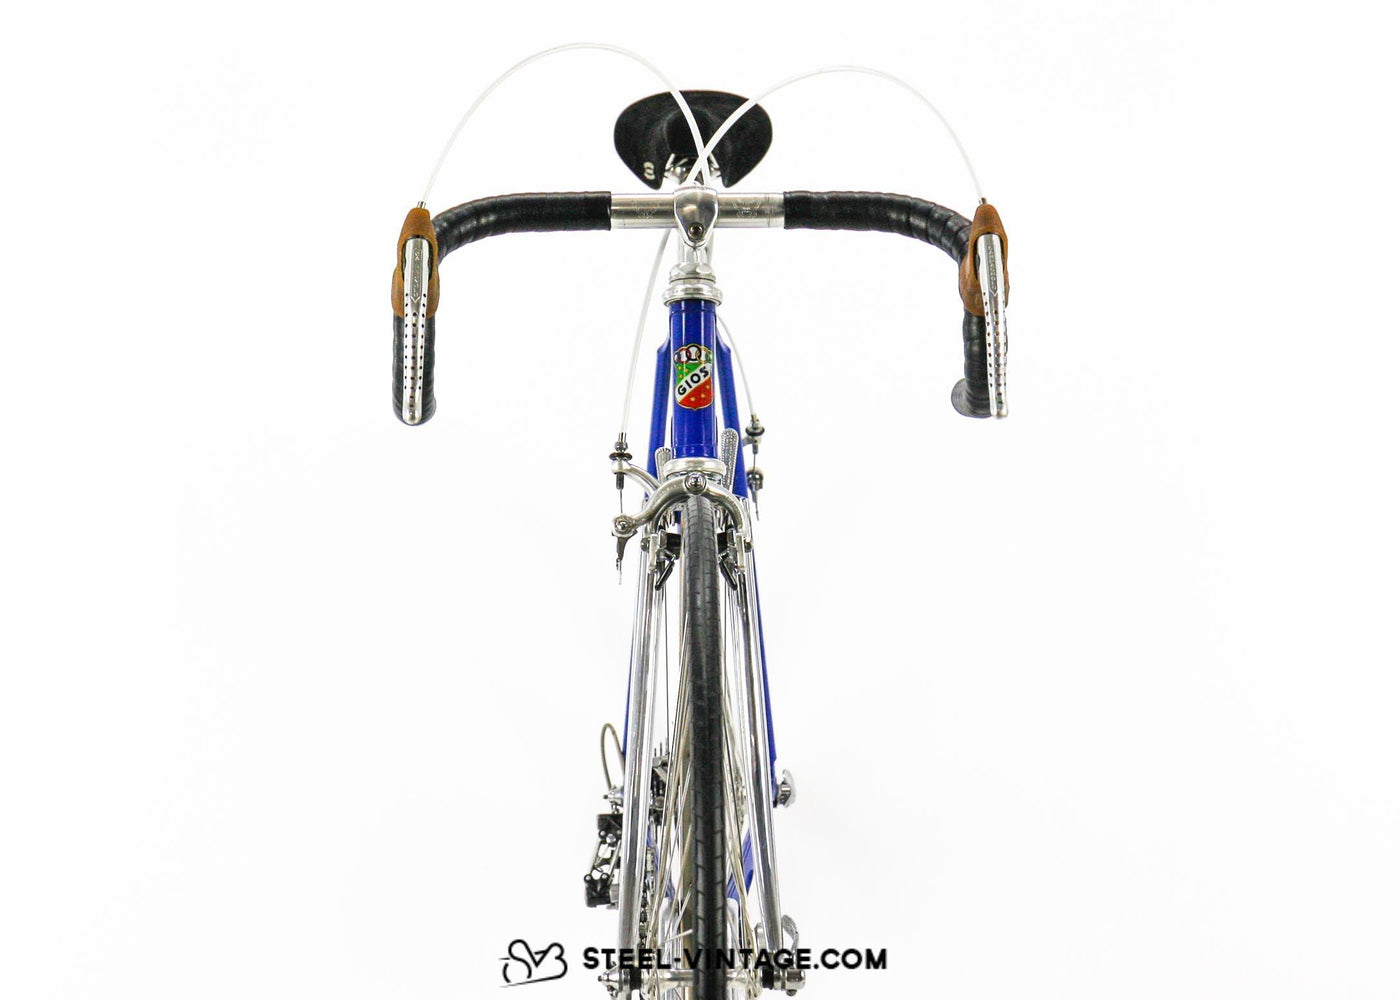 Steel Vintage Bikes - Gios Torino Super Record Classic Road Bike 1978